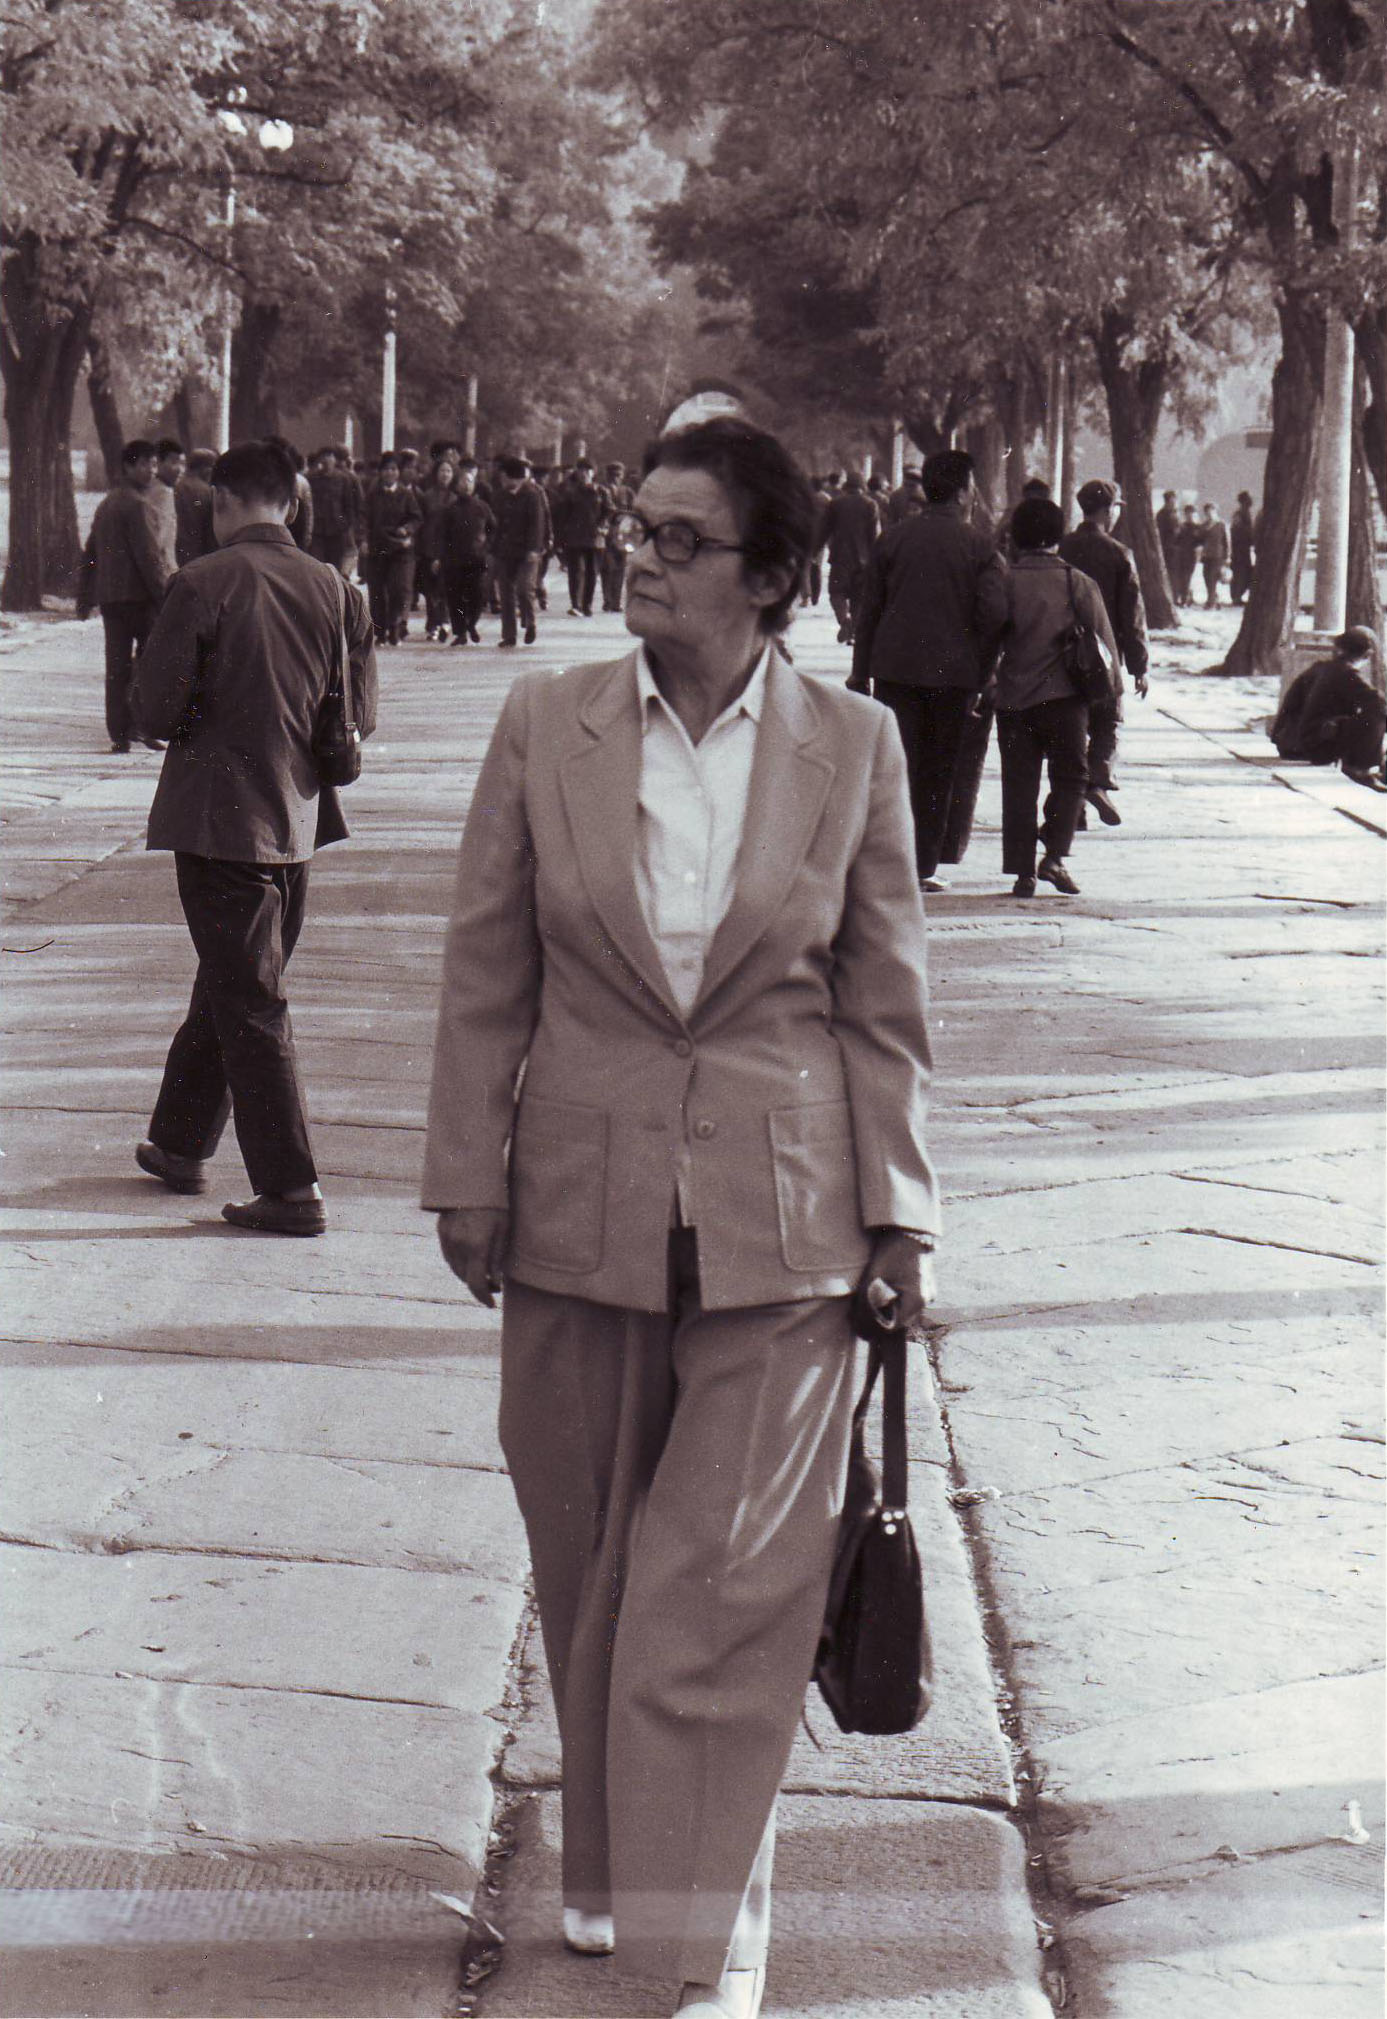 Clare Hollingworth strolls on a street in Beijing in the 1970s/80s.